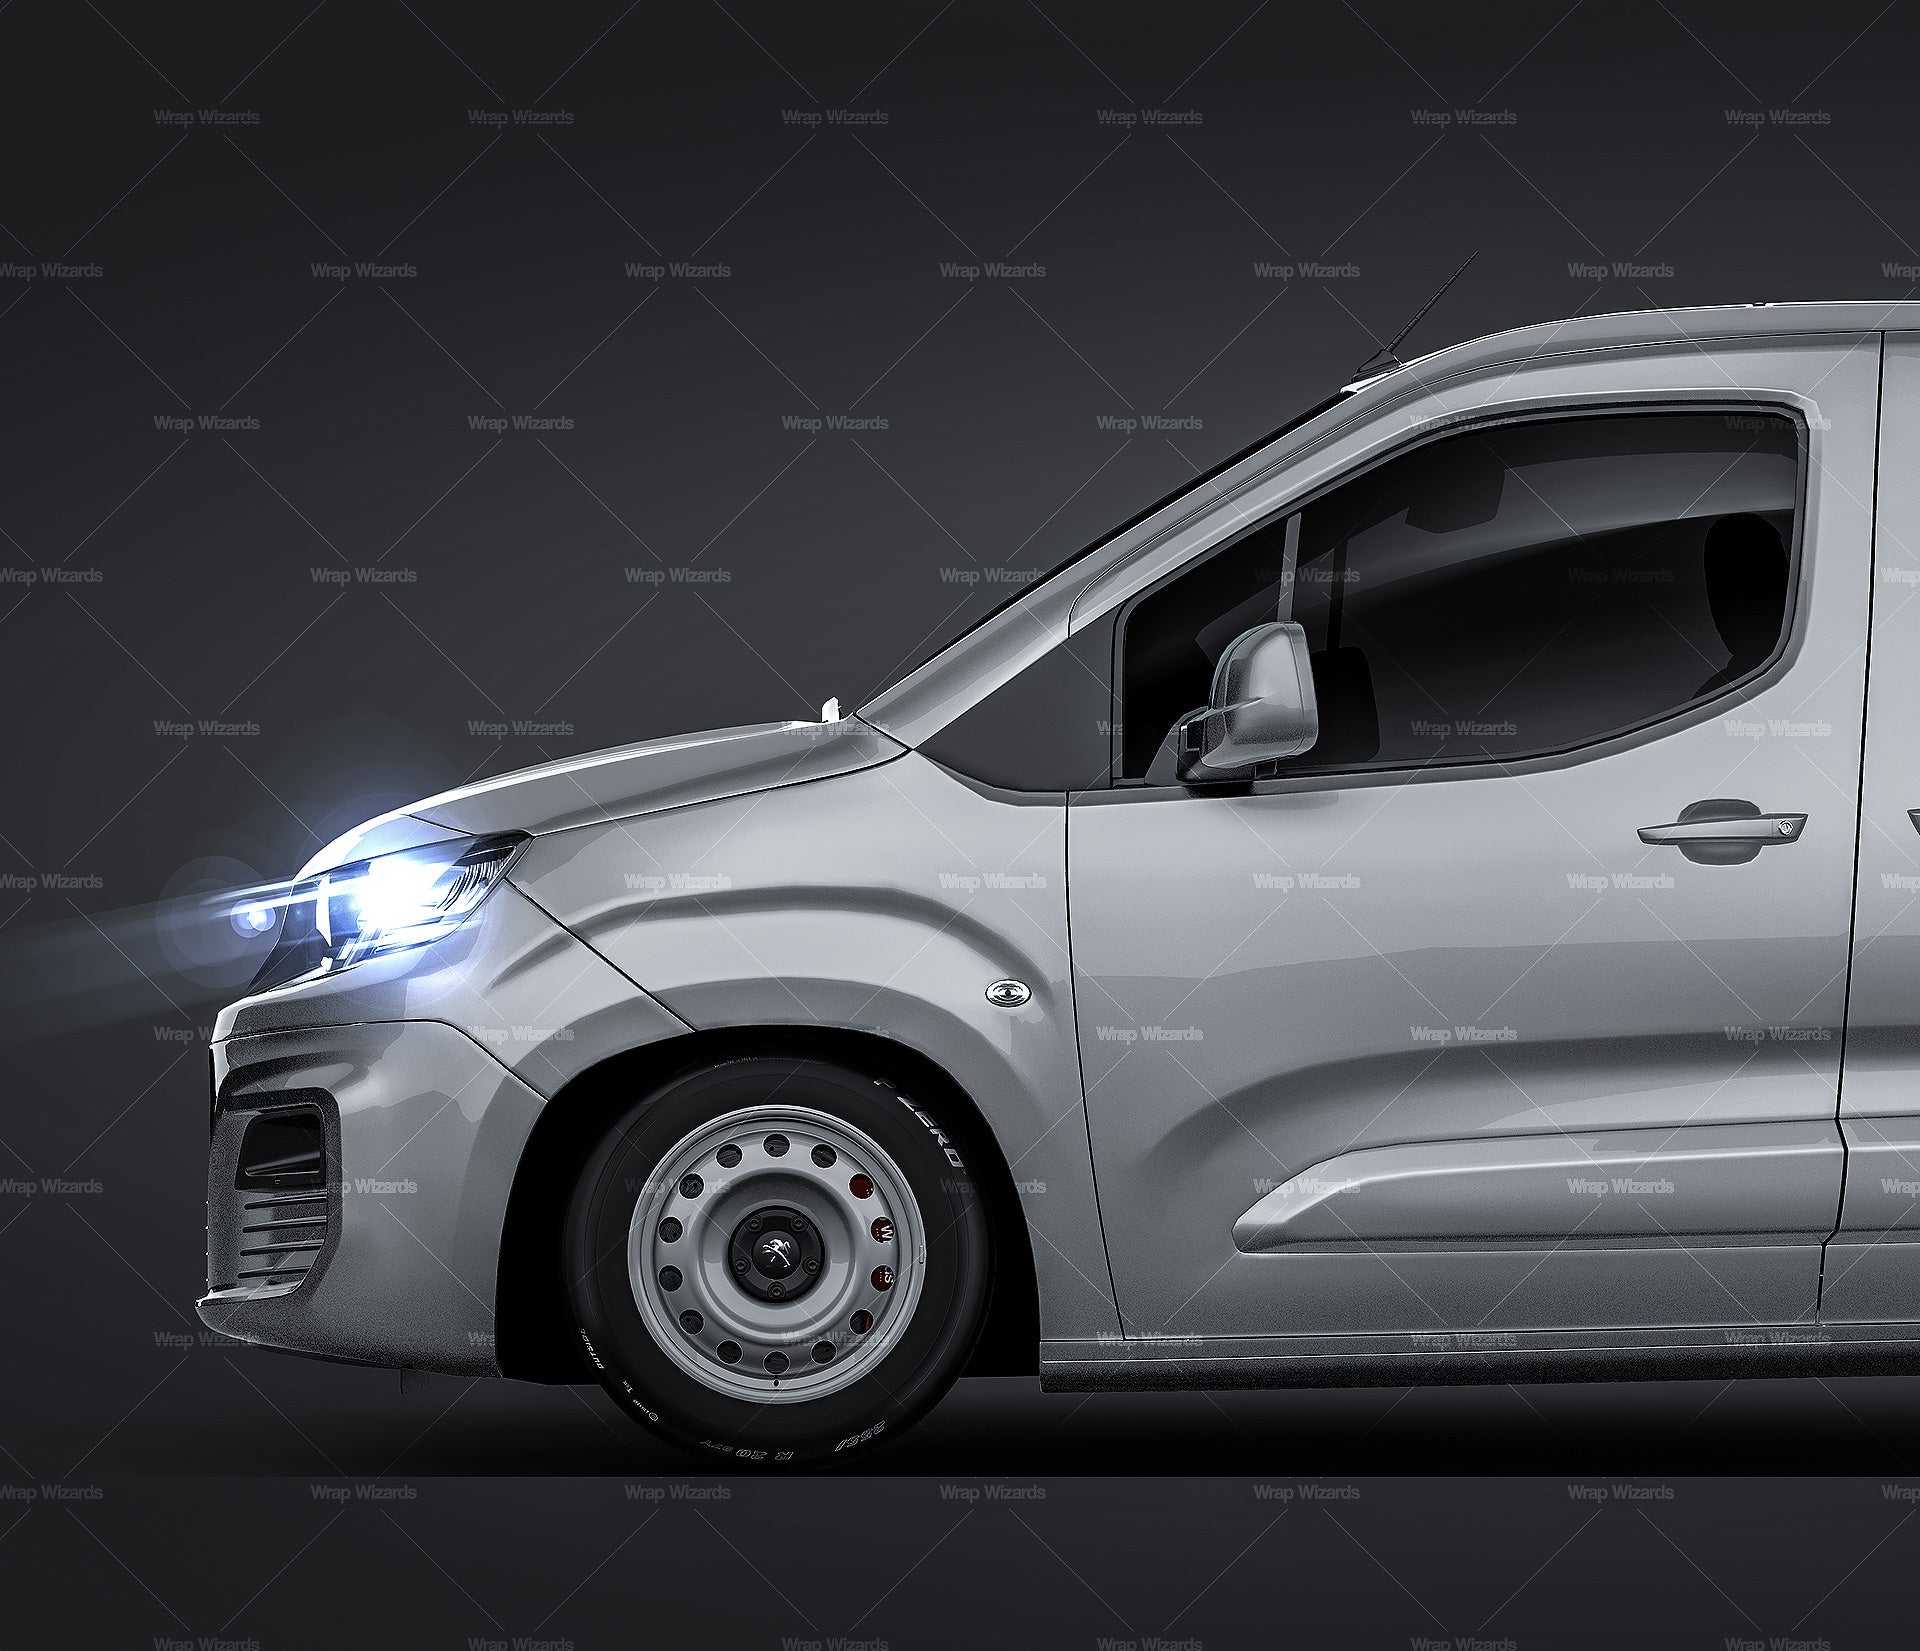 Templates - Cars - Peugeot - Peugeot Partner